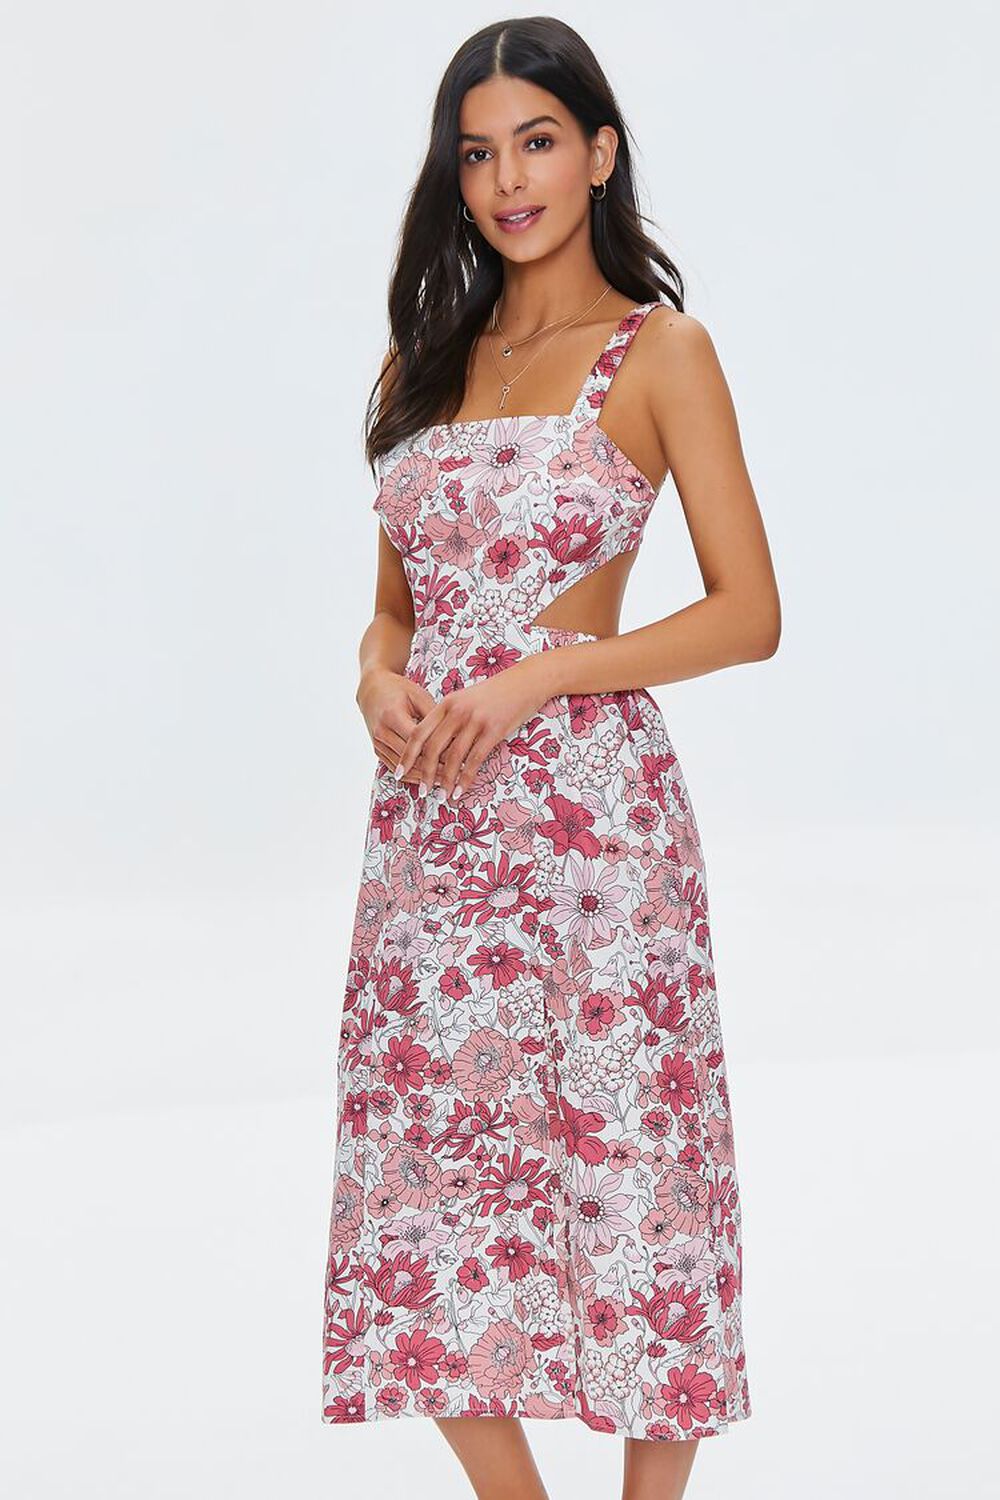 PINK/MULTI Floral Print Cutout Midi Dress, image 1